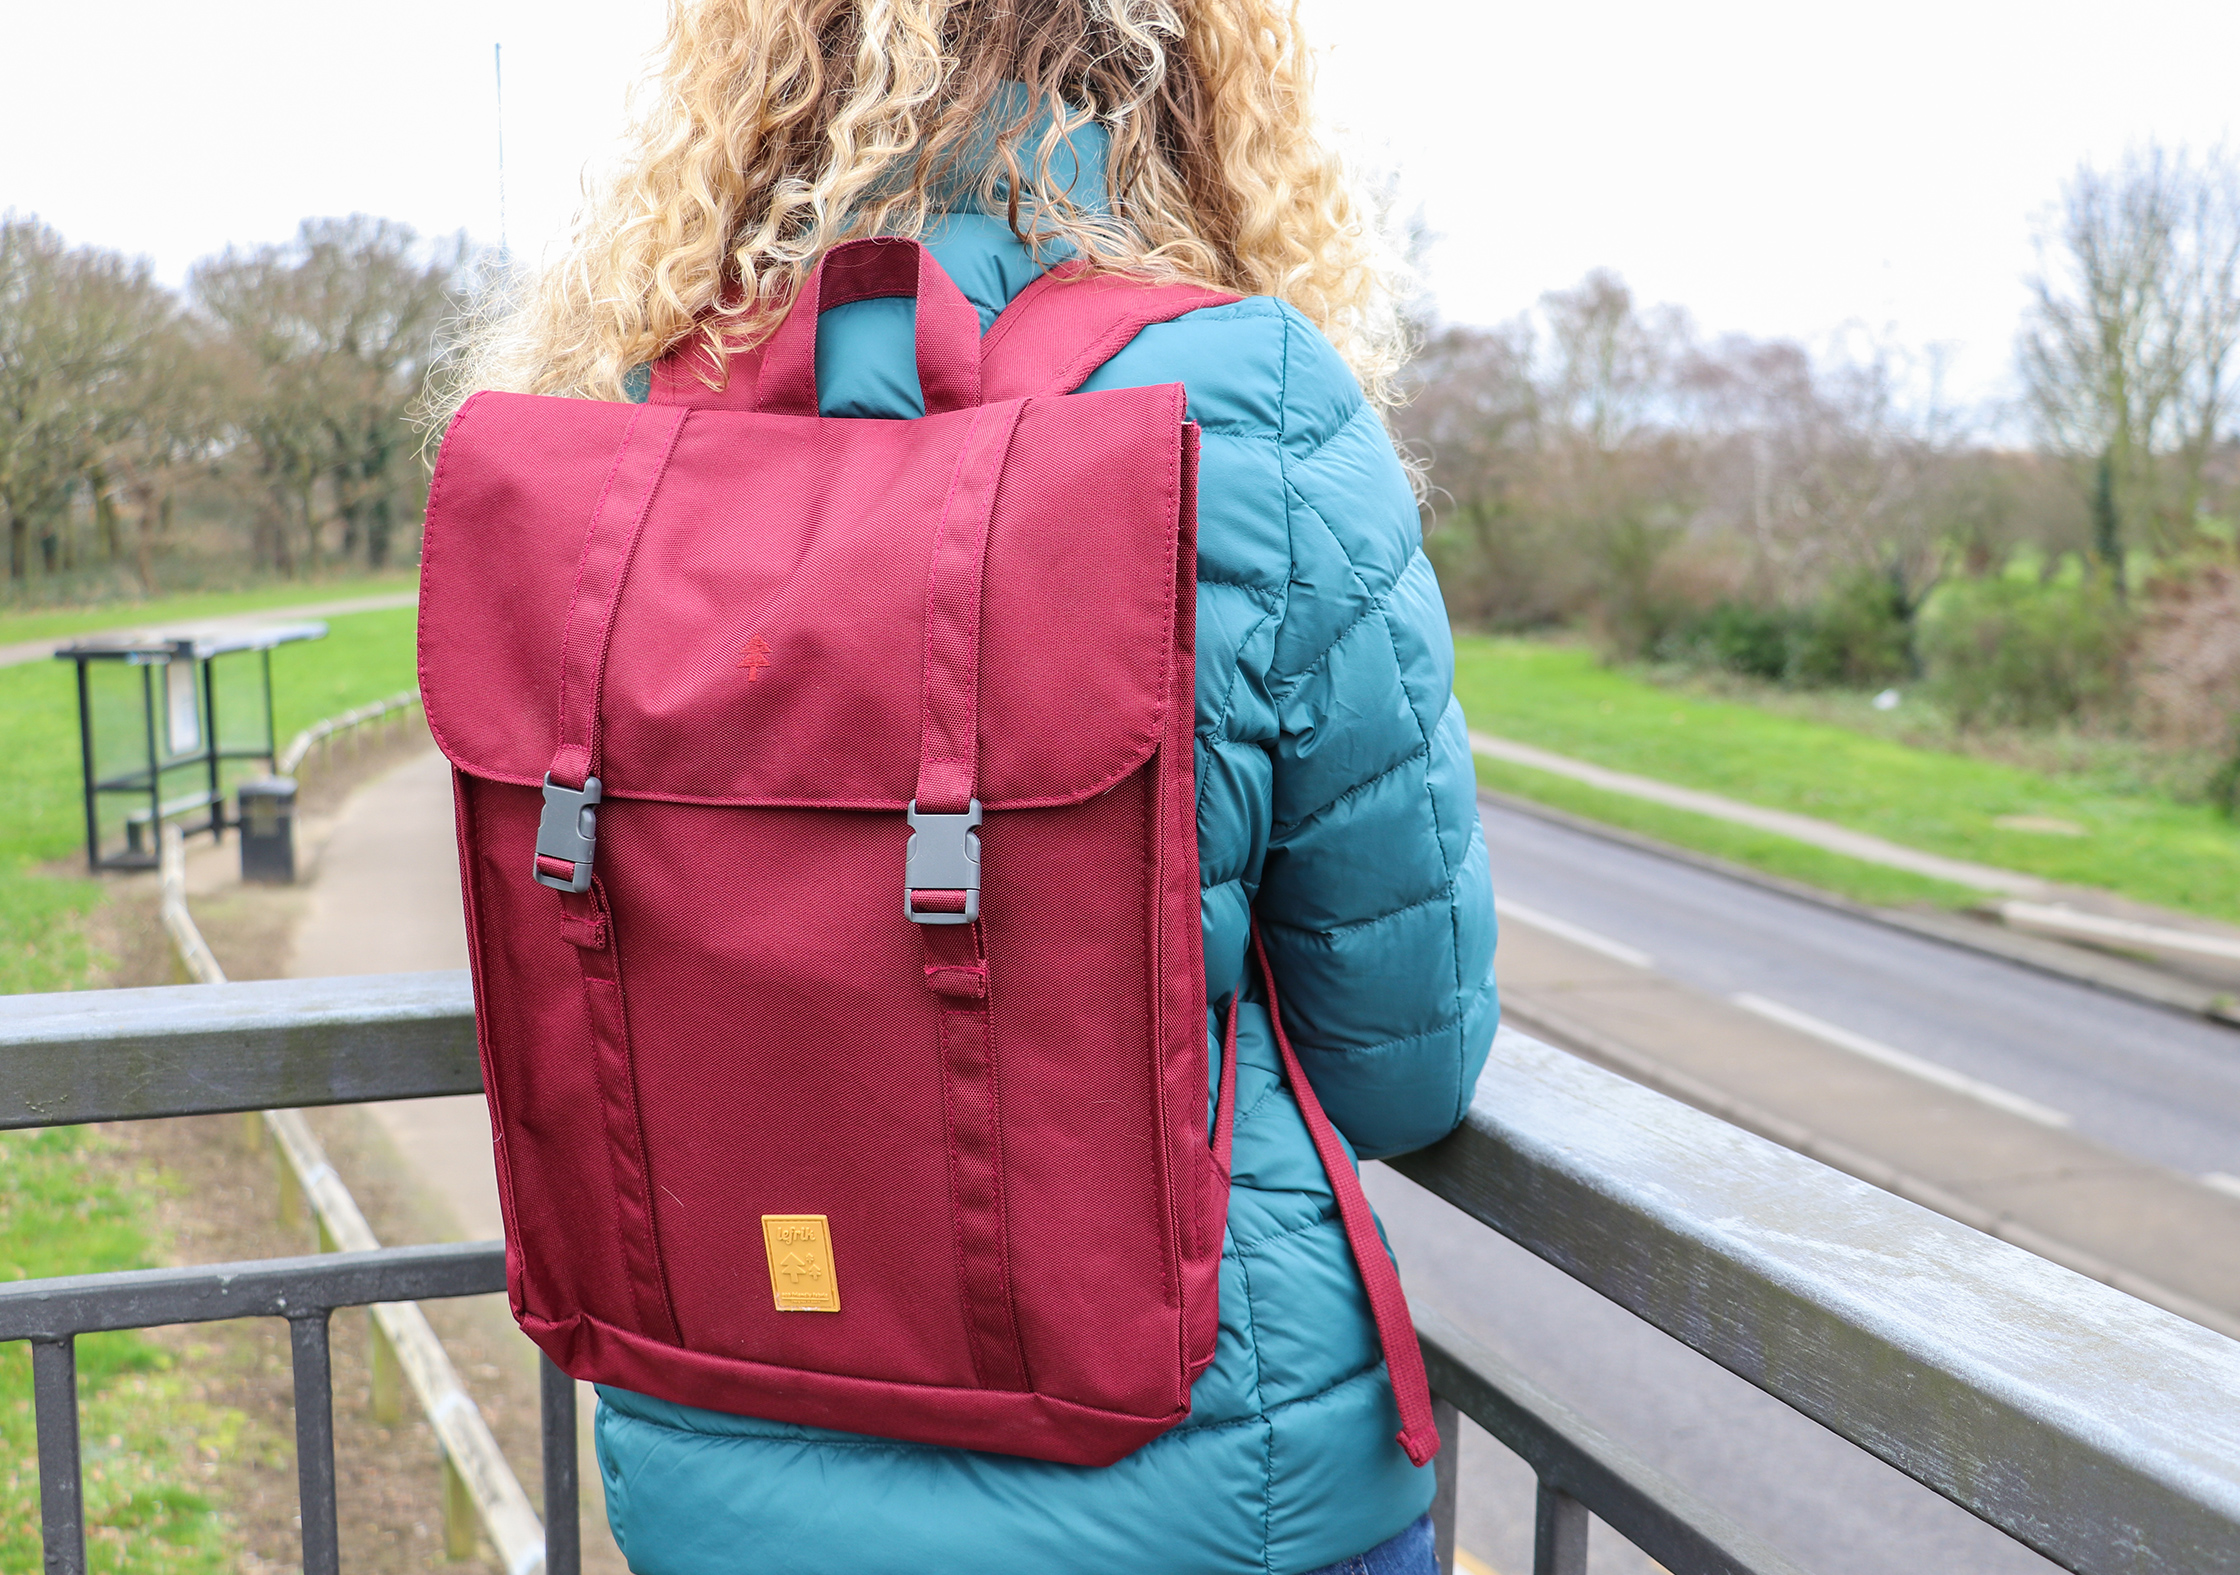 Lefrik Handy Backpack In Essex, England